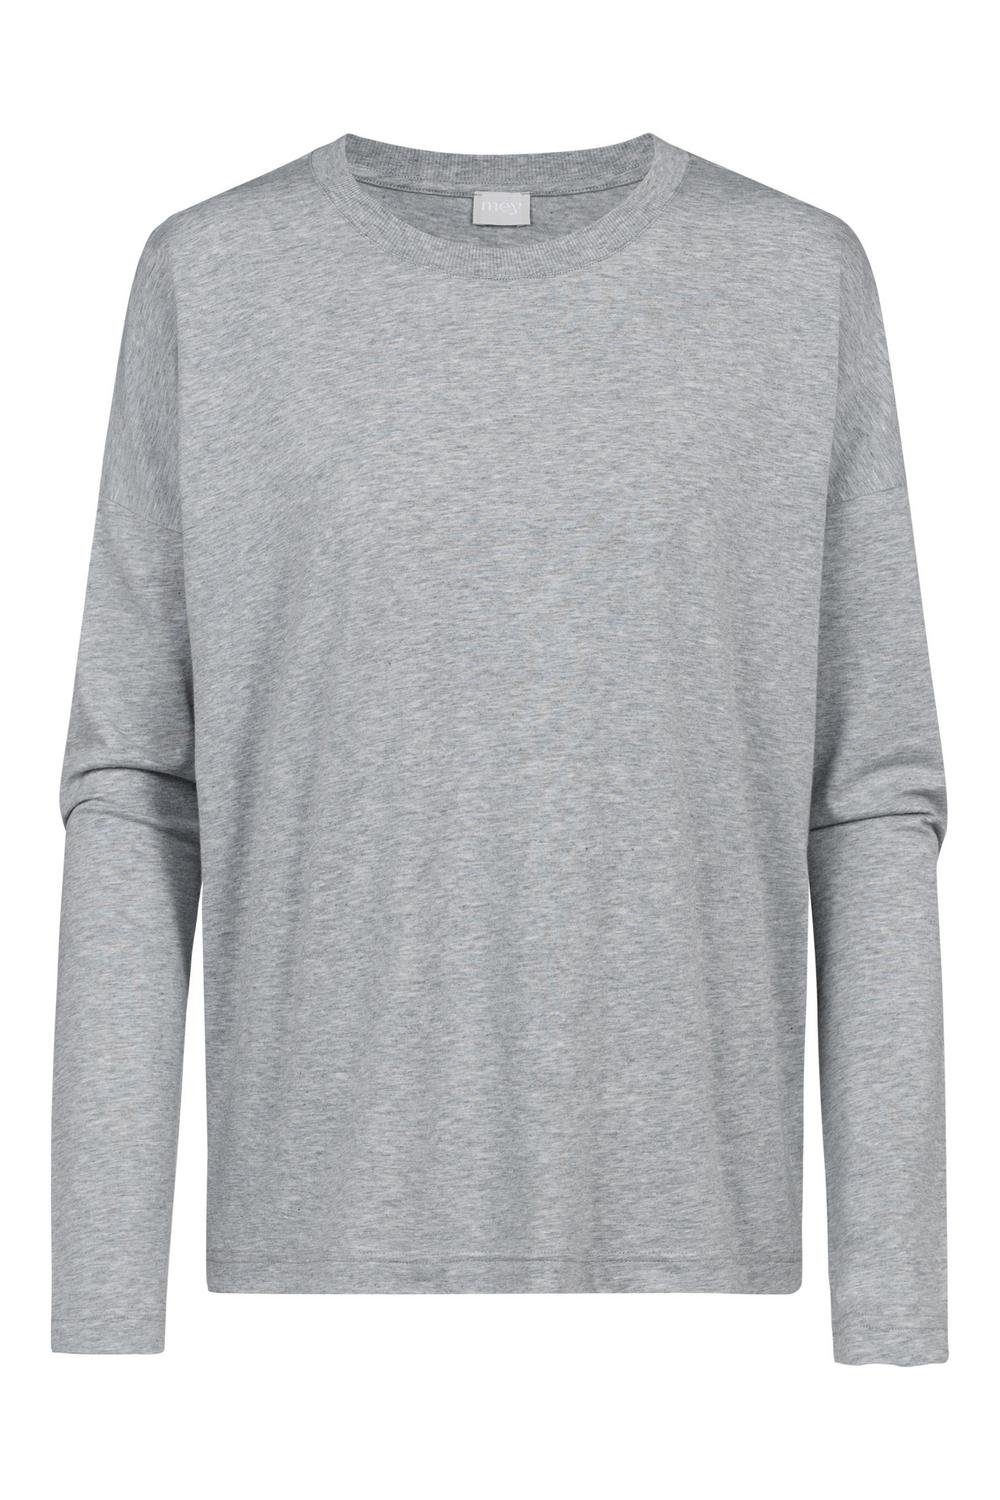 Mey Pyjama T-Shirt langarm, grey melange